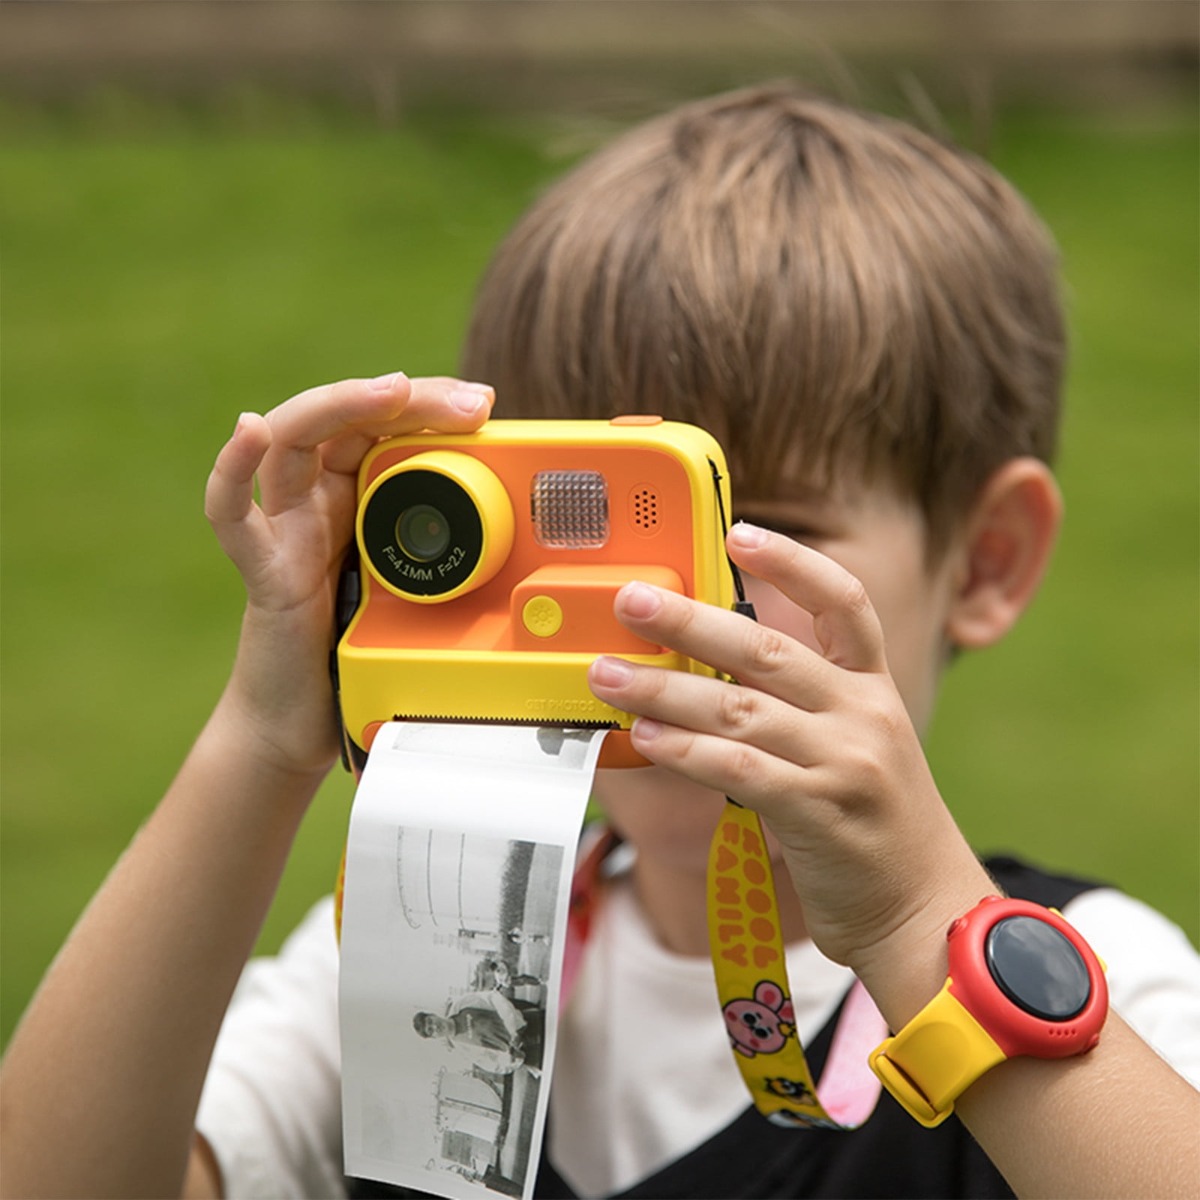 Children Instant Print Camera